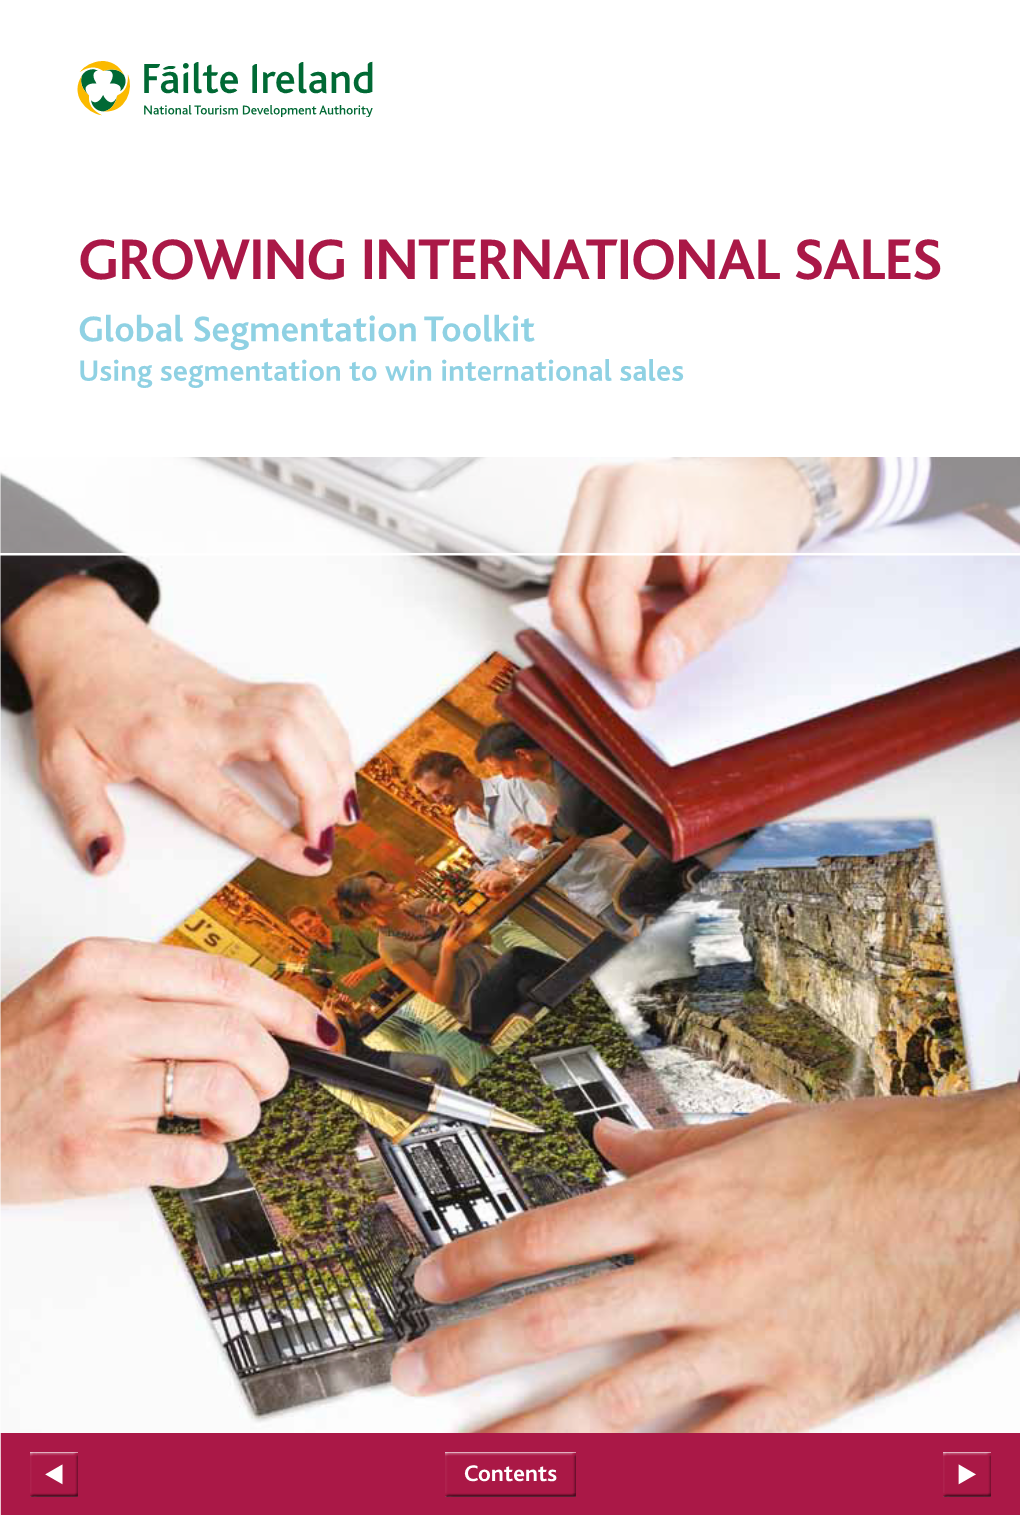 GROWING INTERNATIONAL SALES Global Segmentation Toolkit Using Segmentation to Win International Sales CONTENTS